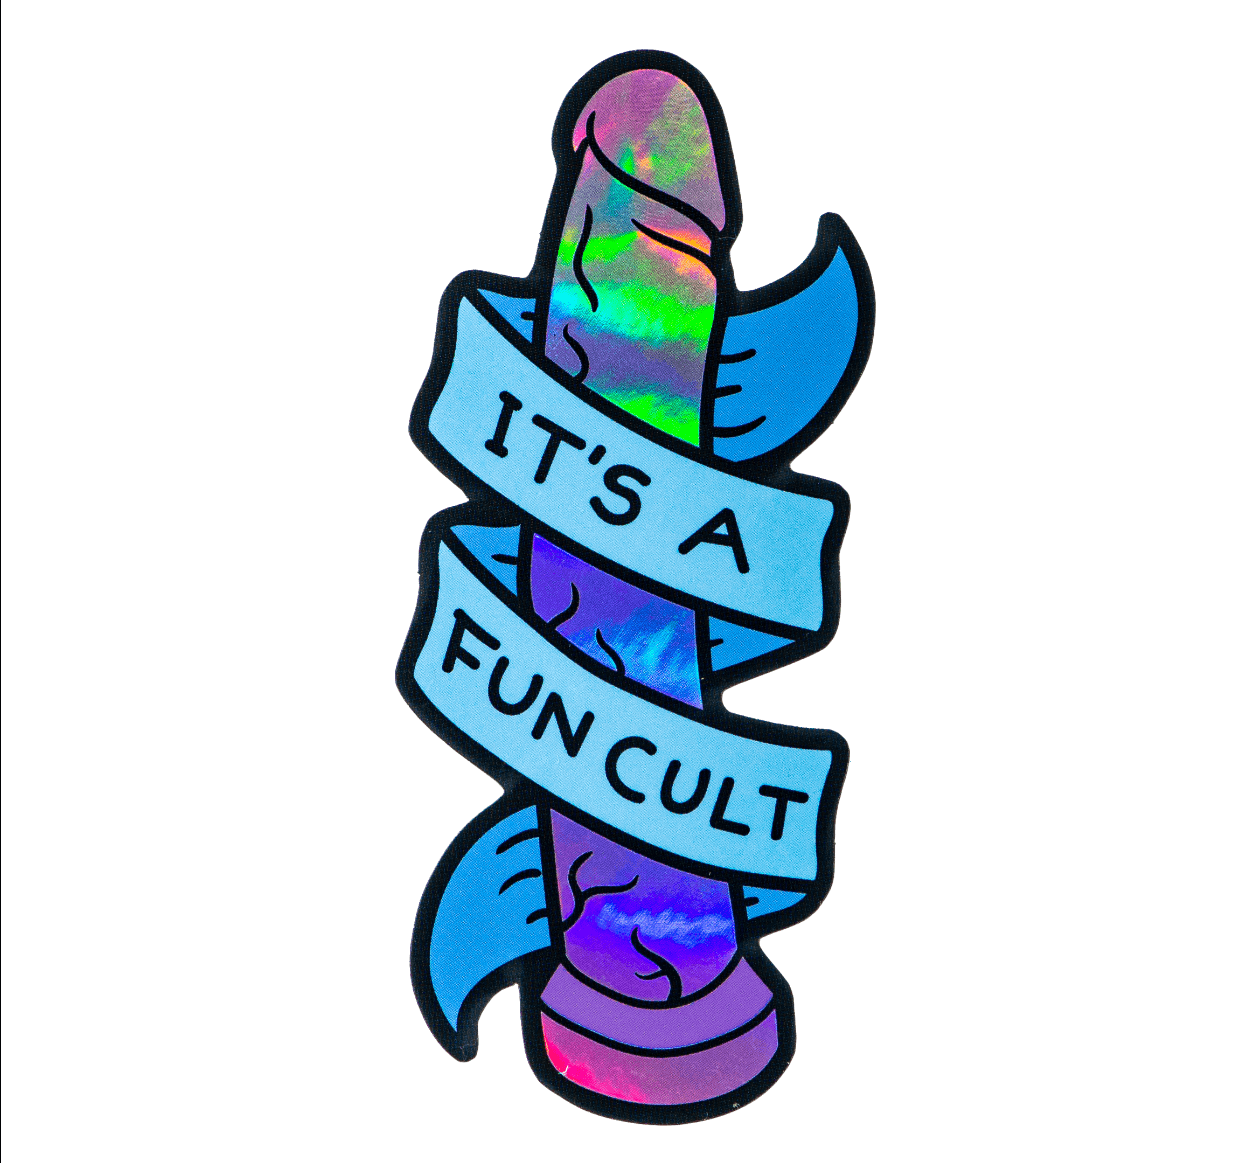 Fun Cult Holographic Sticker